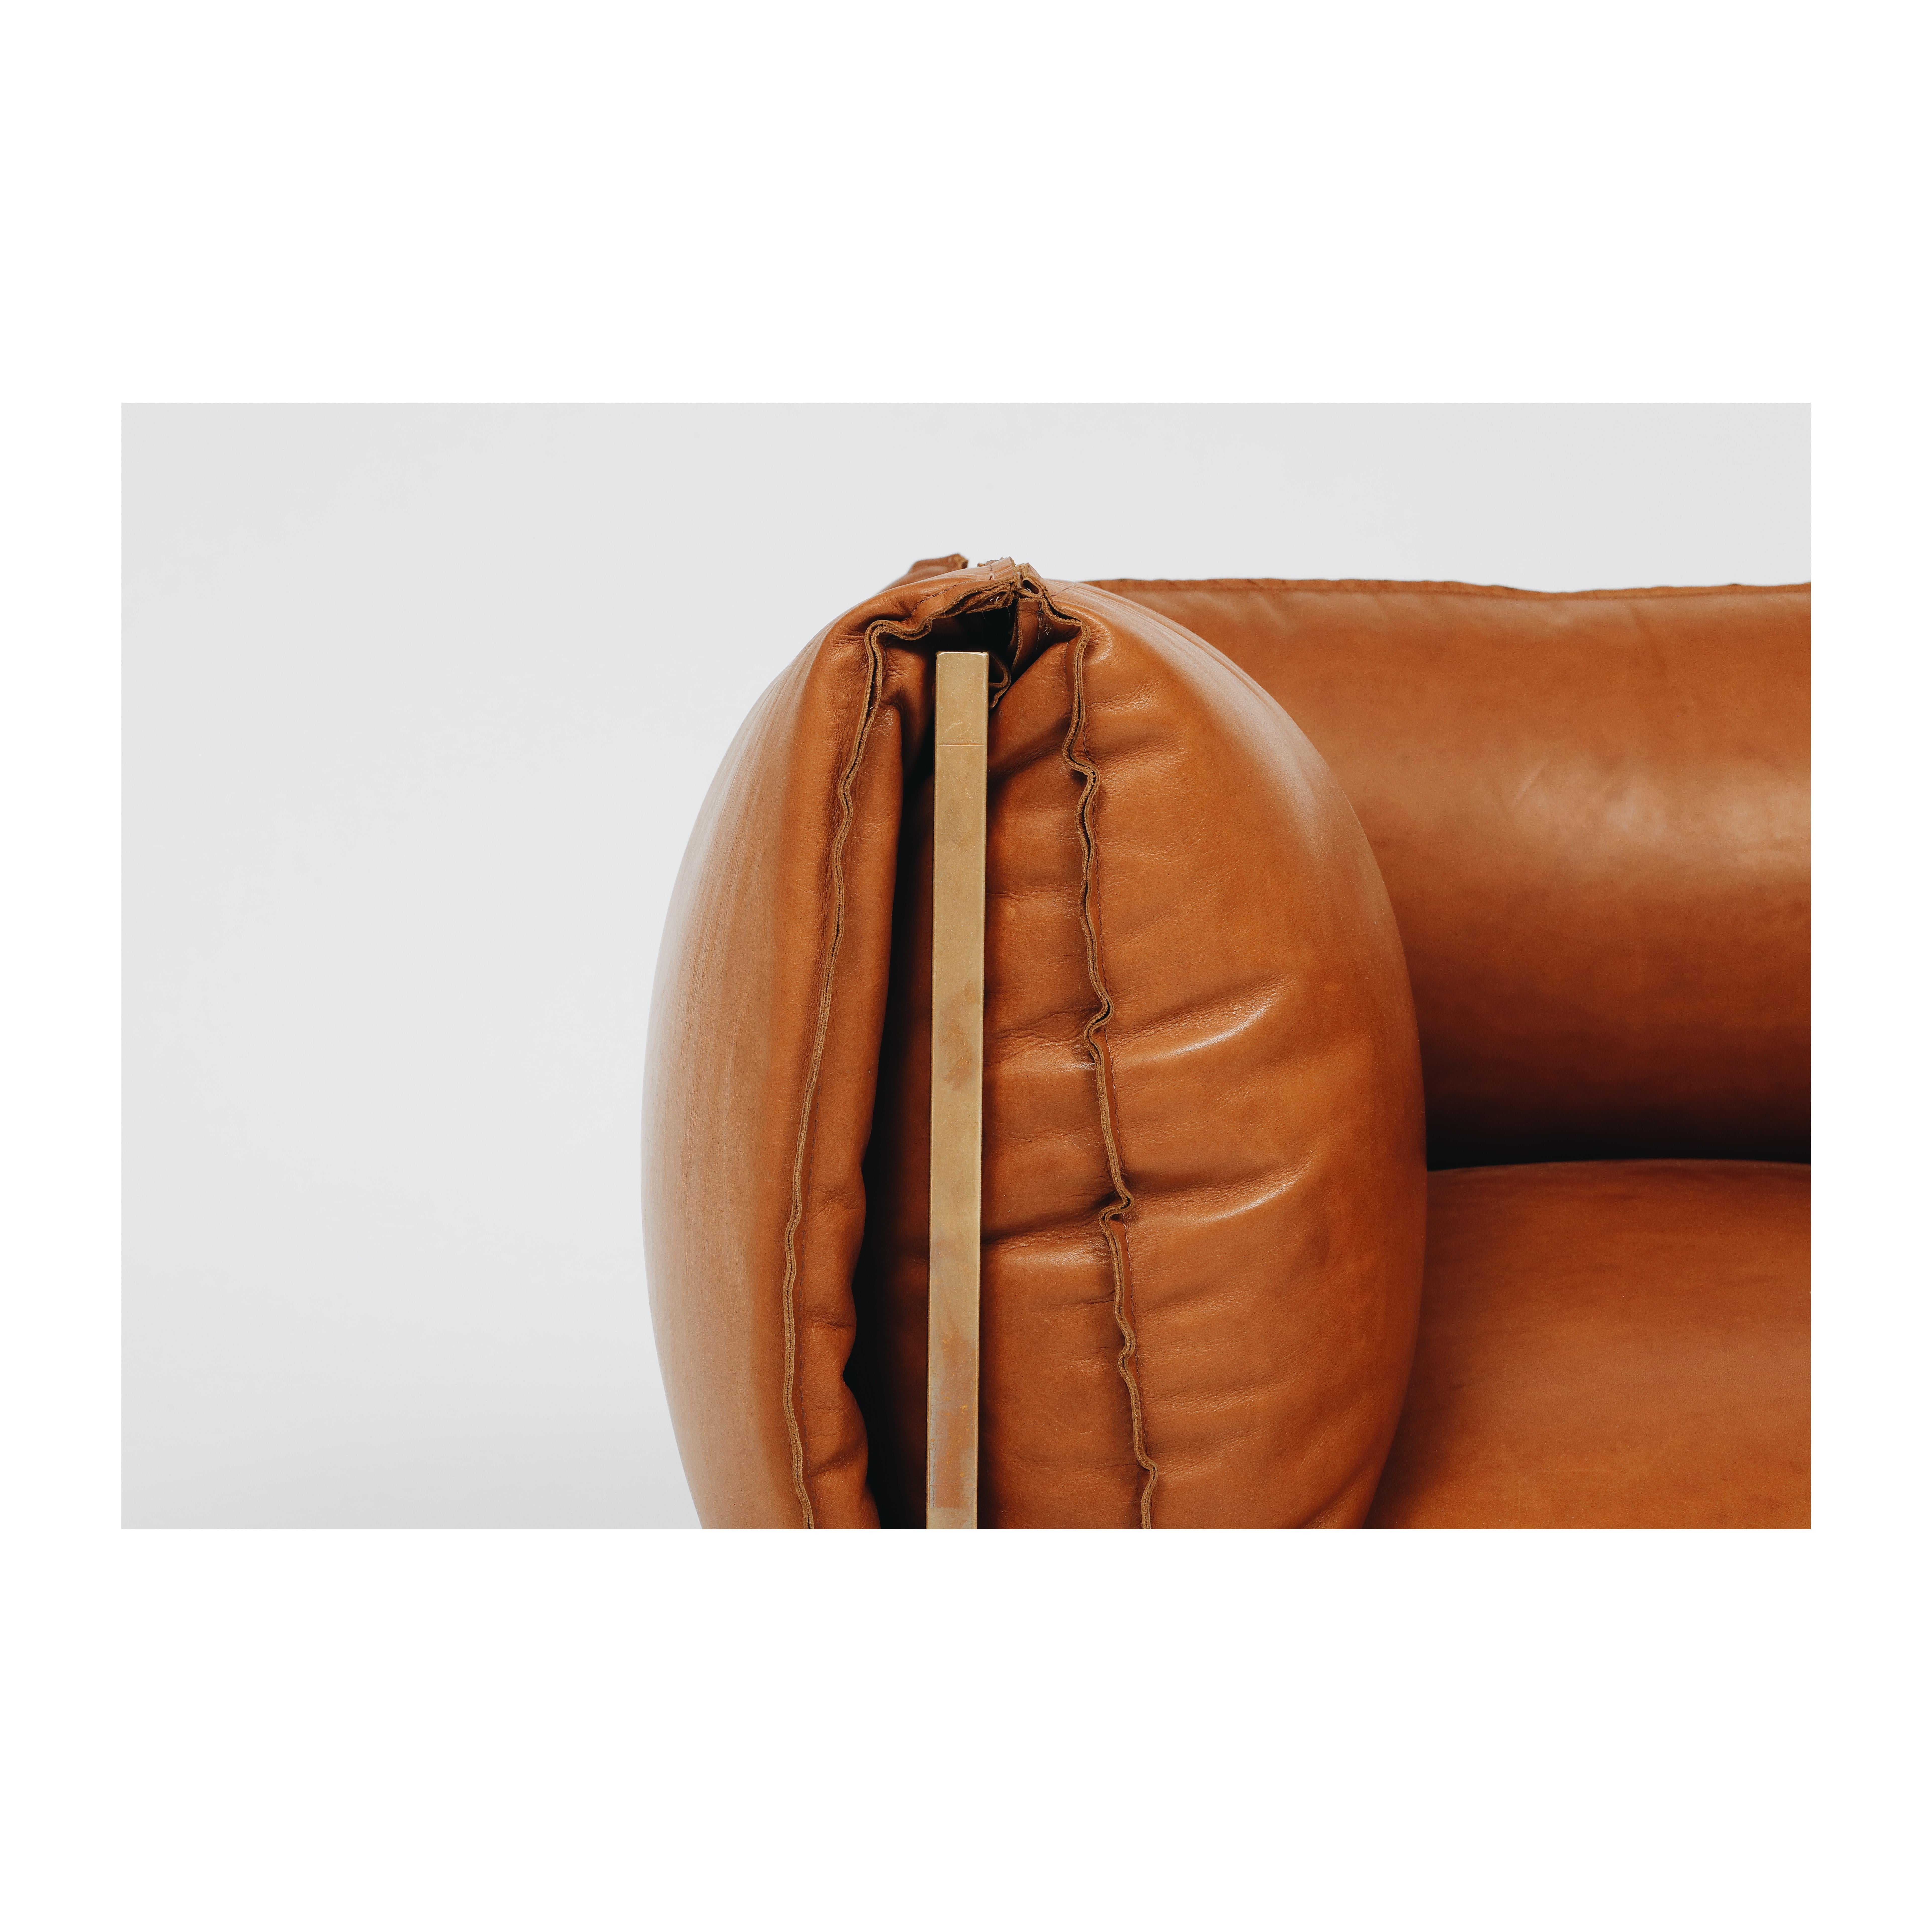 Sessel aus cognacfarbenem Leder und brüniertem, messingfarbenem, lasergeschnittenem Stahlgestell (Moderne) im Angebot